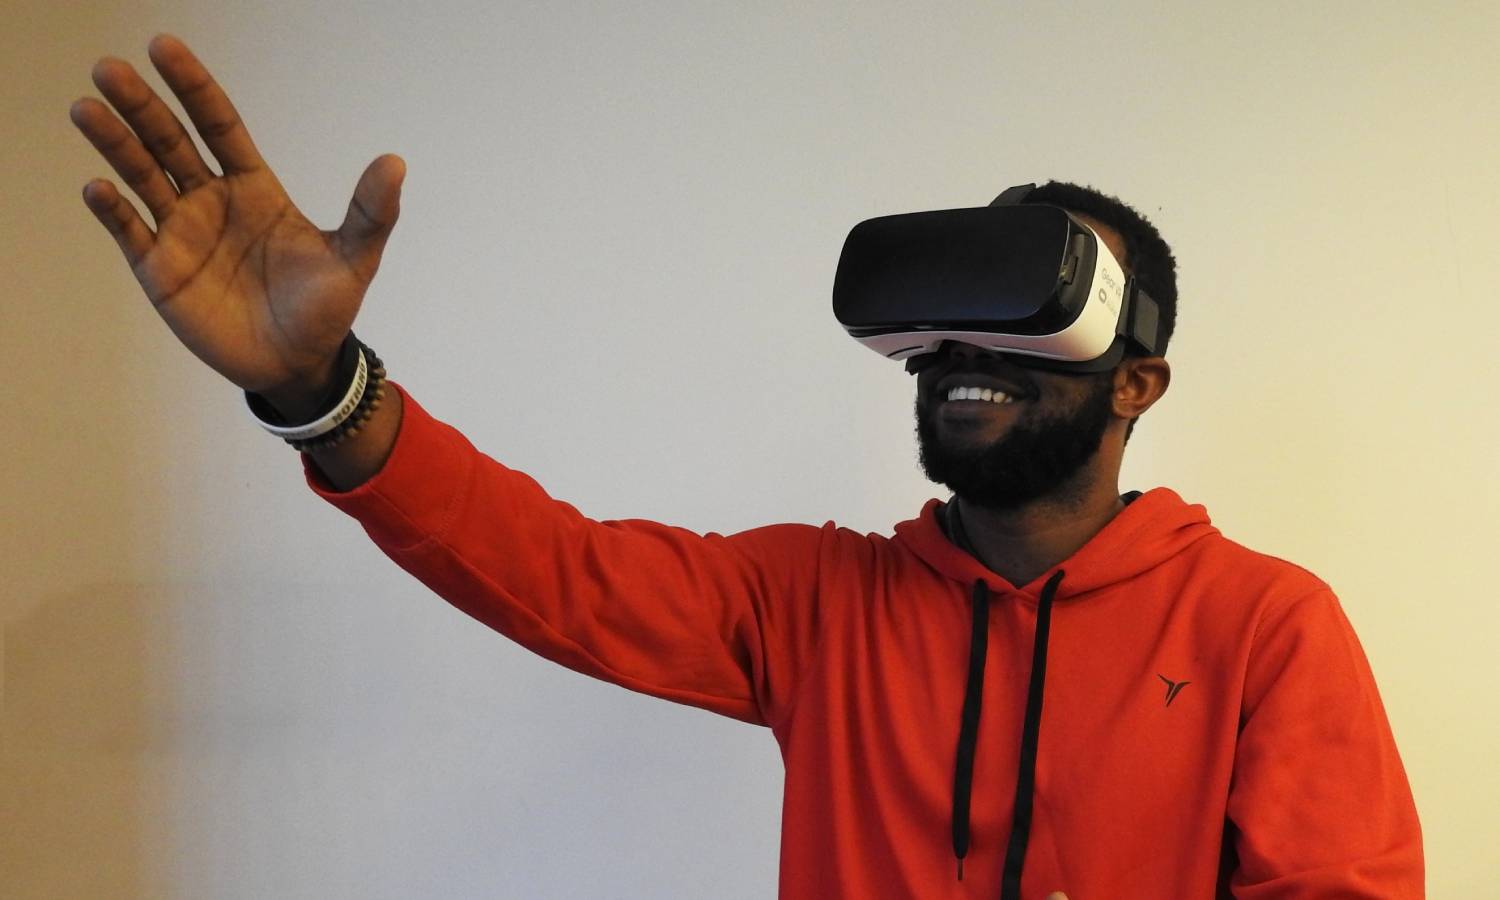 The Stunning Allumette Is the First VR Film Masterpiece